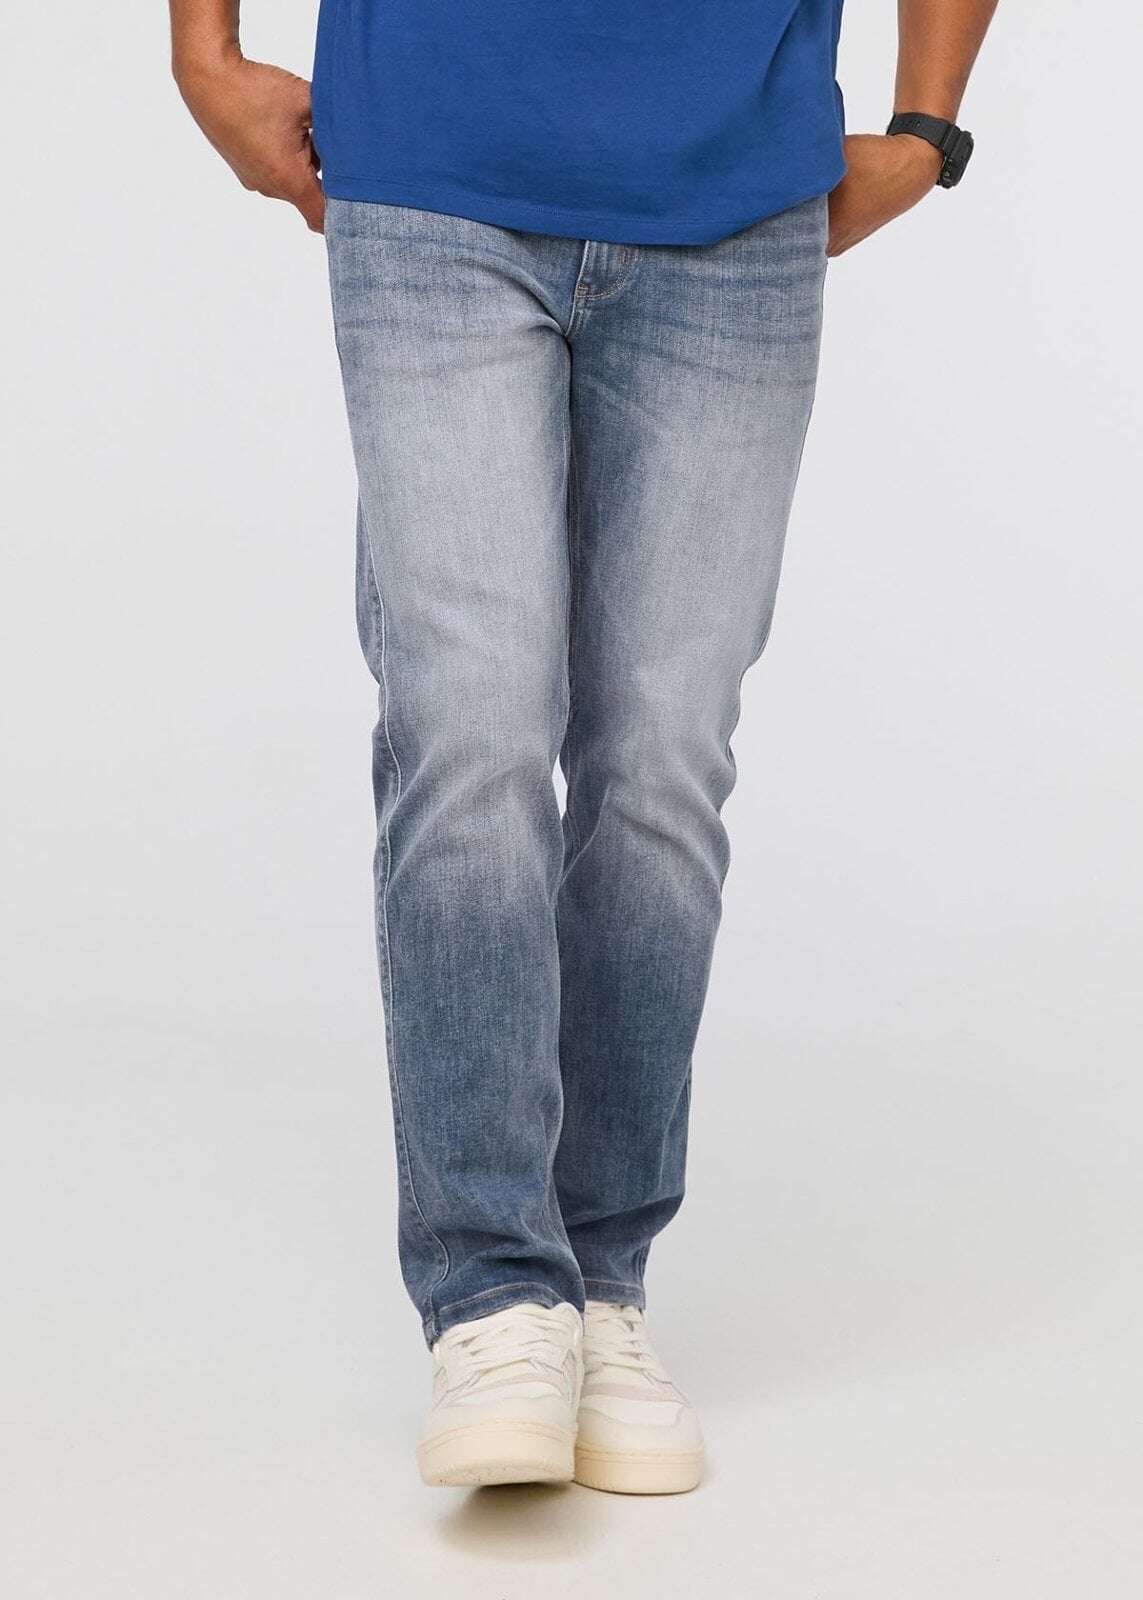 Men's Straight Leg Jeans & Pants - DUER